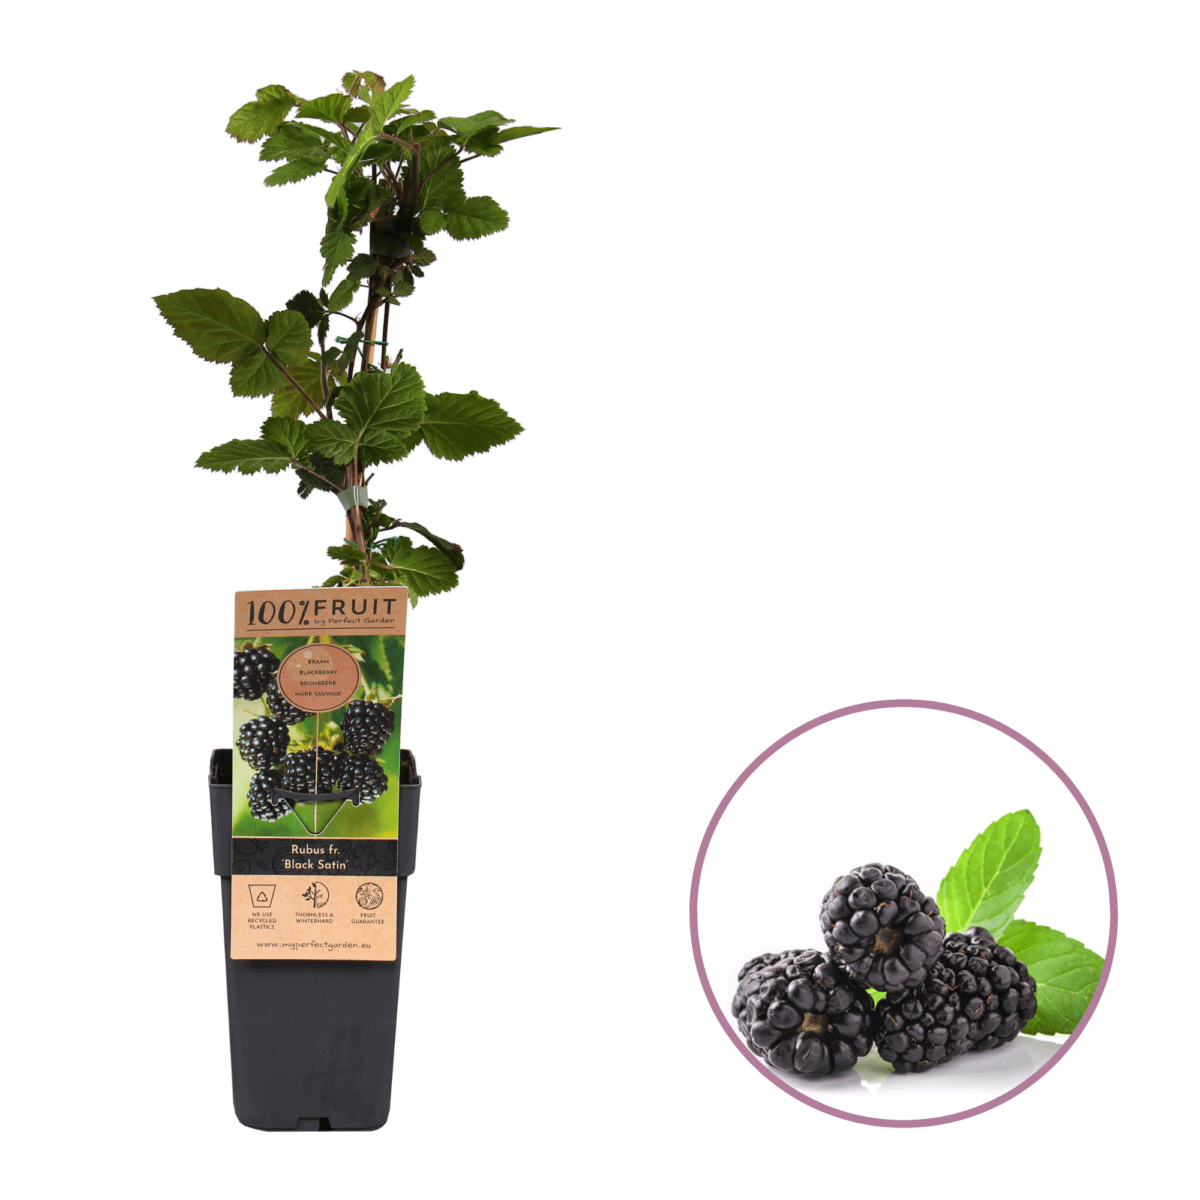 Bramen plant Black Satin P15